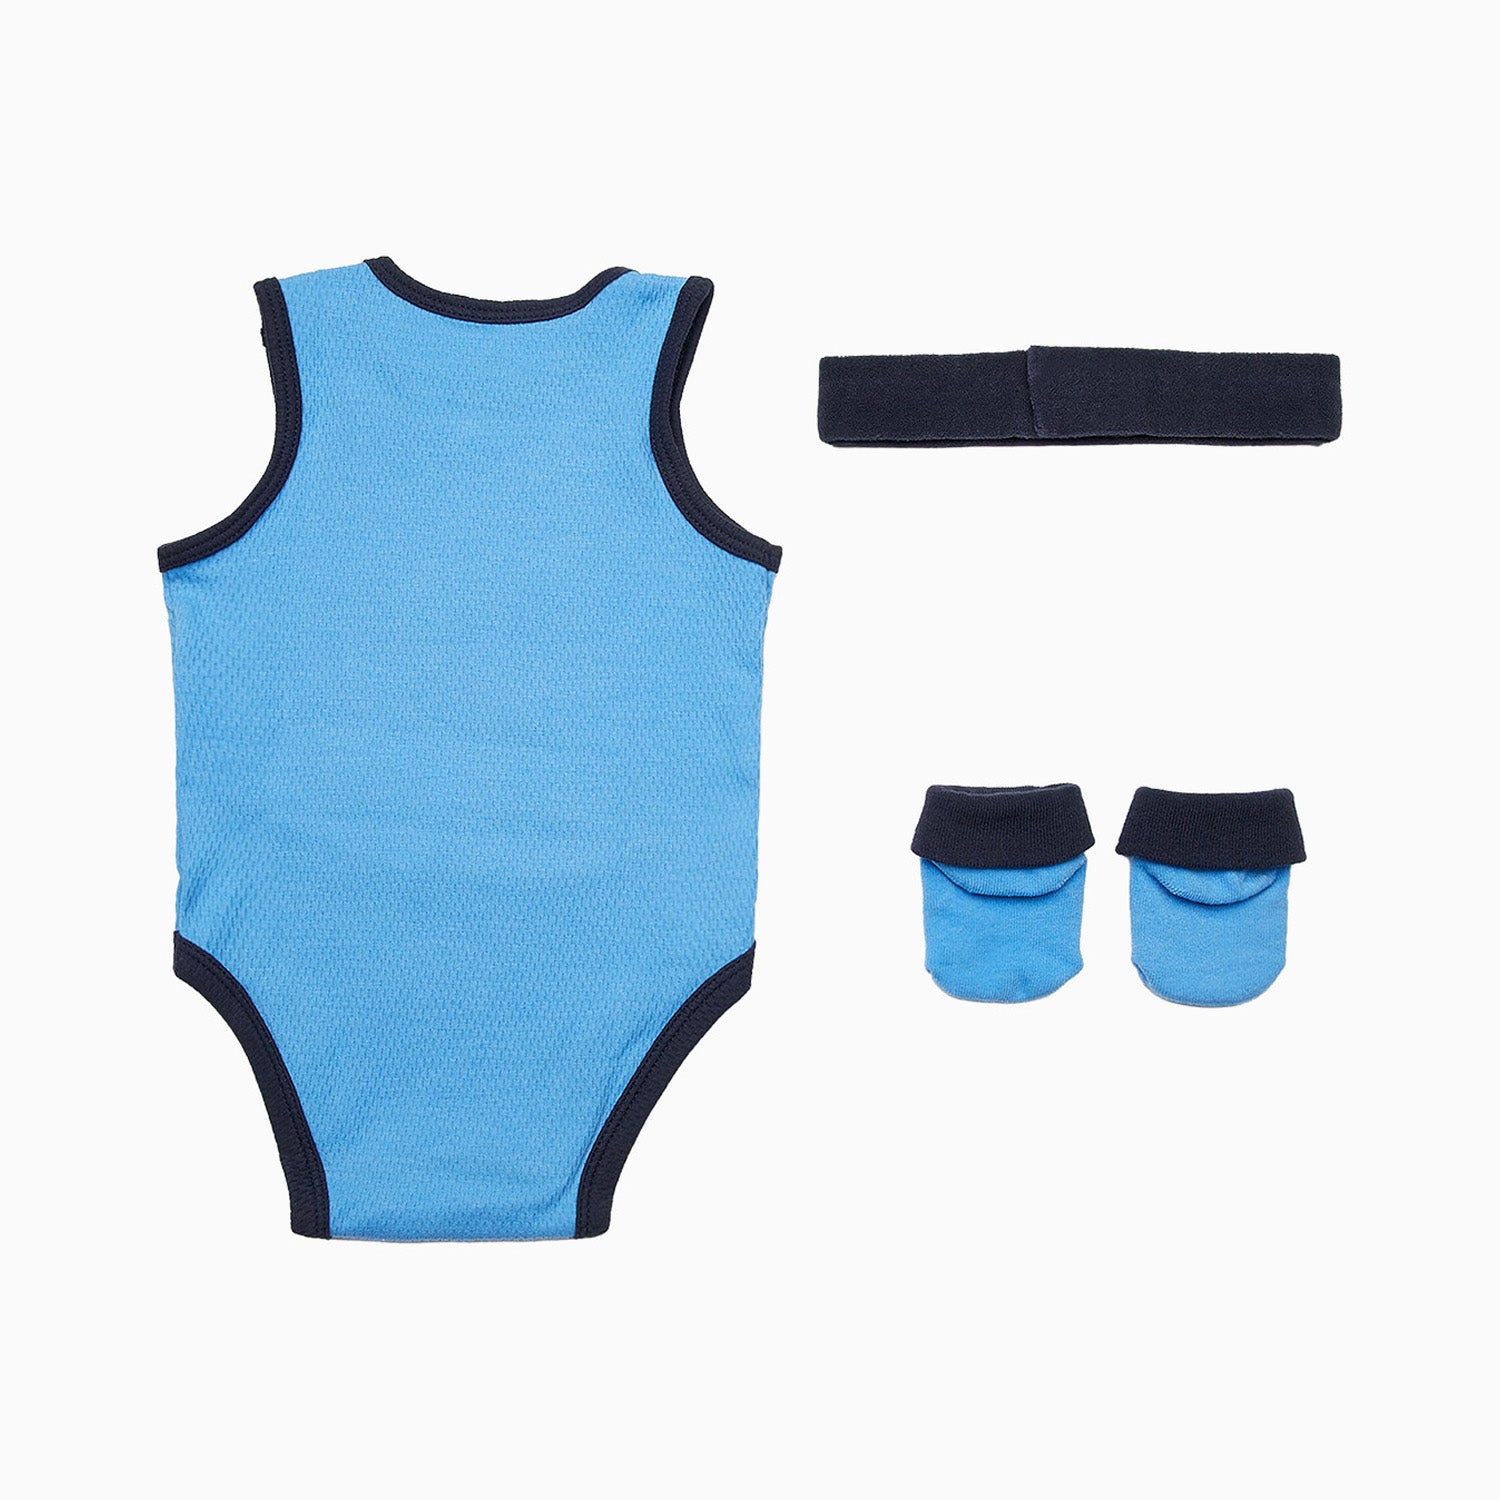 jordan-haddad-kids-jumpman-3-piece-mesh-jersey-bodysuit-set-outfit-nj0598-b9f